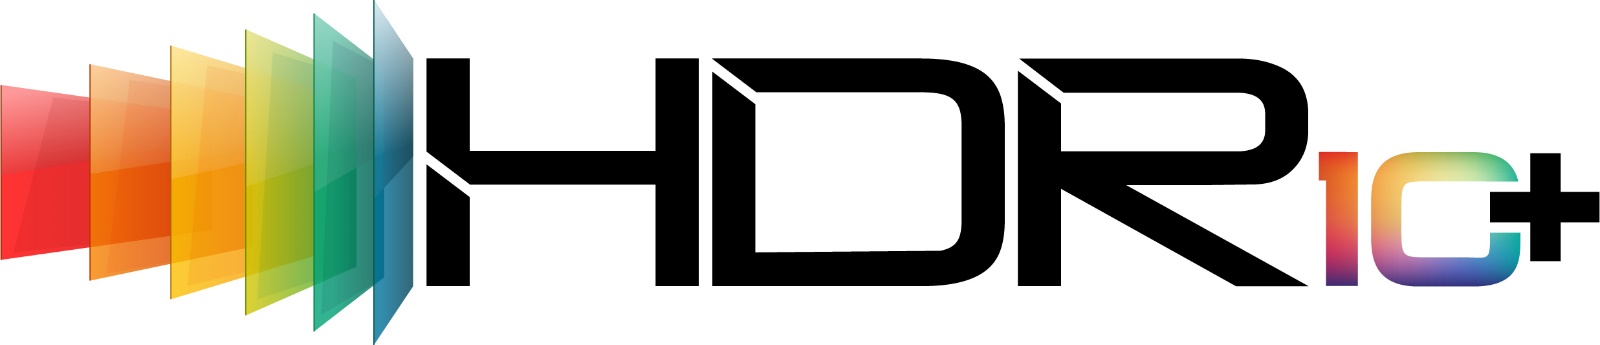 HDR10 Plus standard